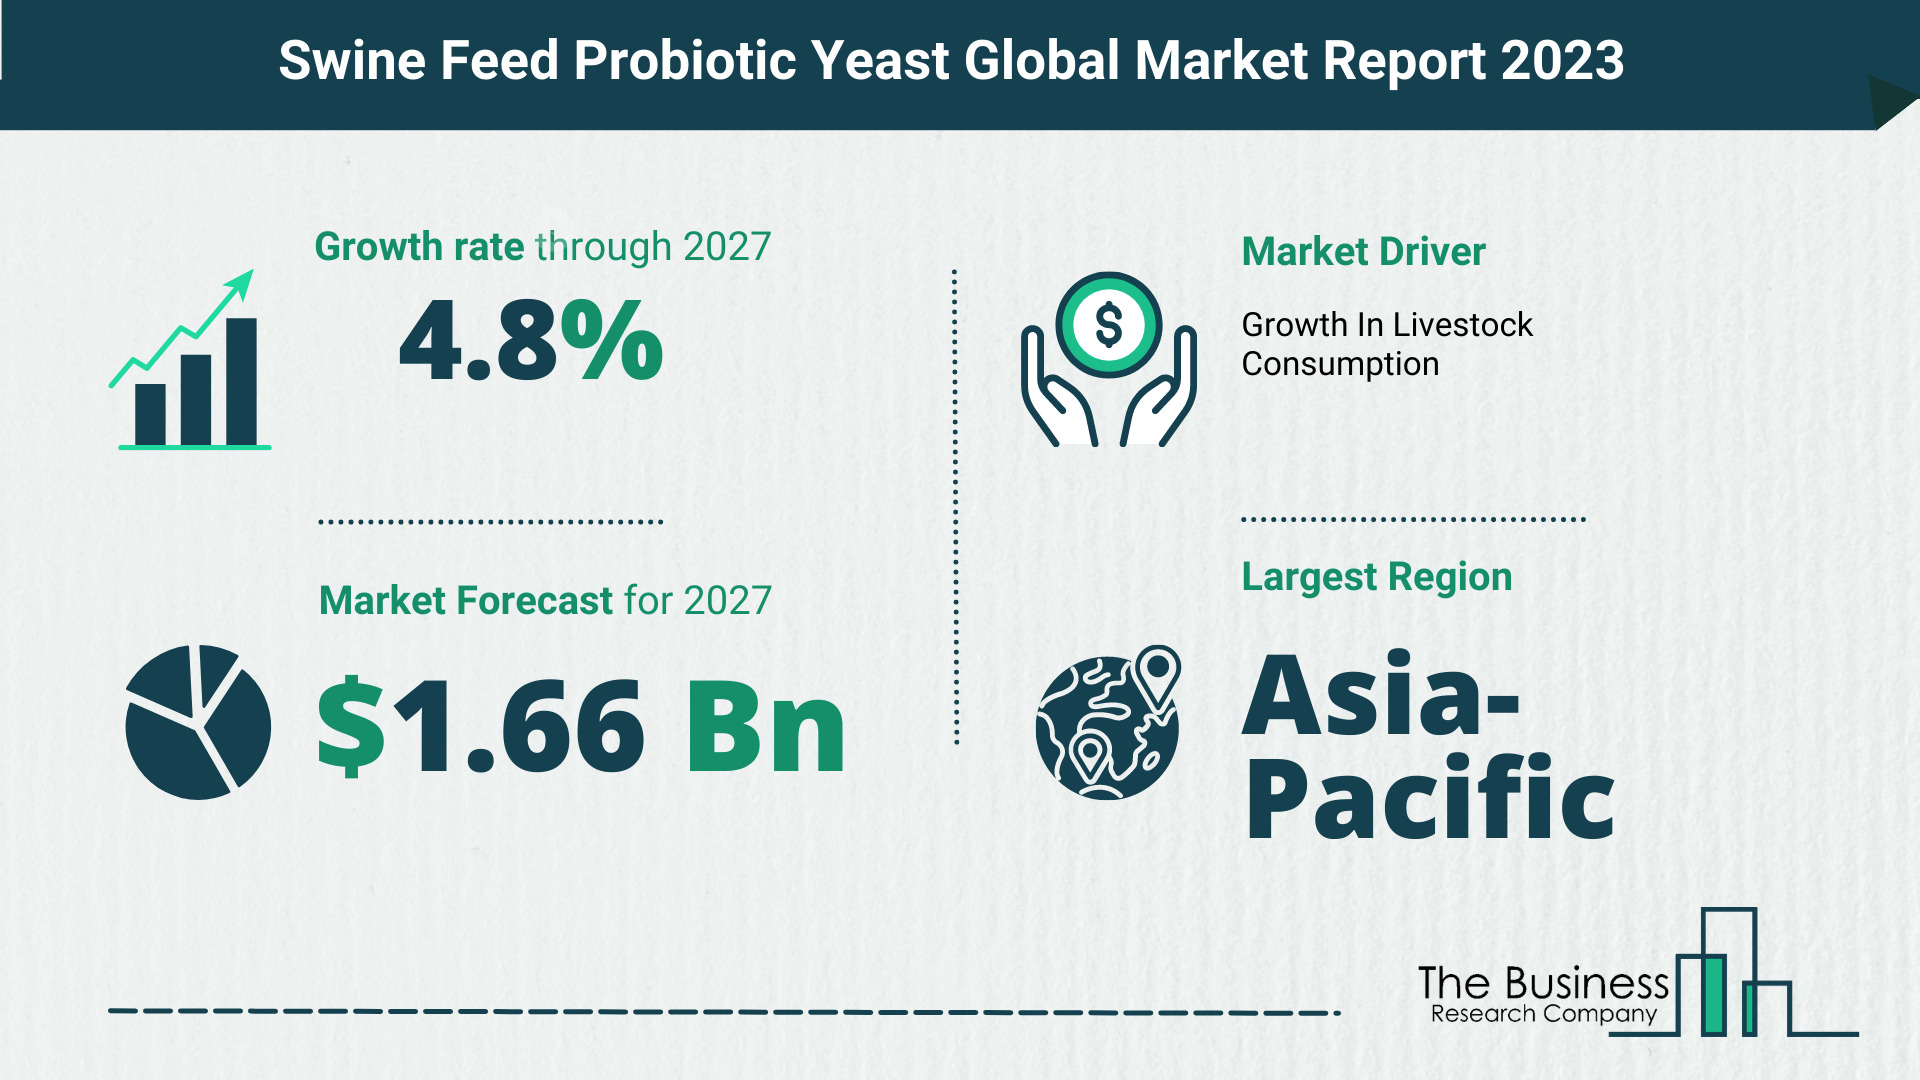 Global Swine Feed Probiotic Yeast Market Opportunities And Strategies 2023